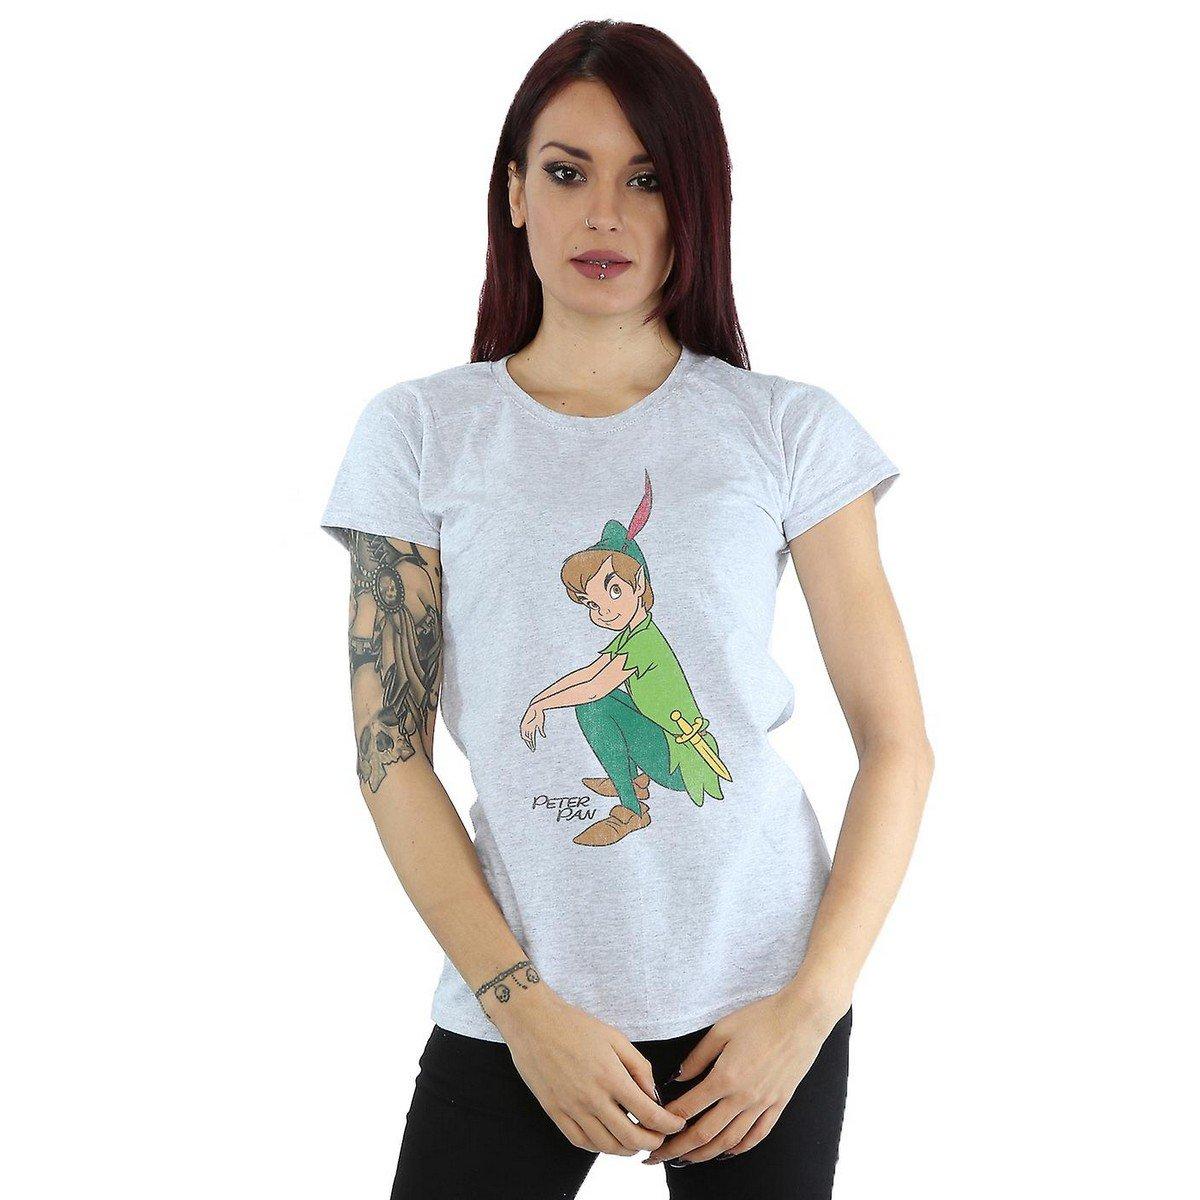 Classic Tshirt Damen Grau XL von Peter Pan